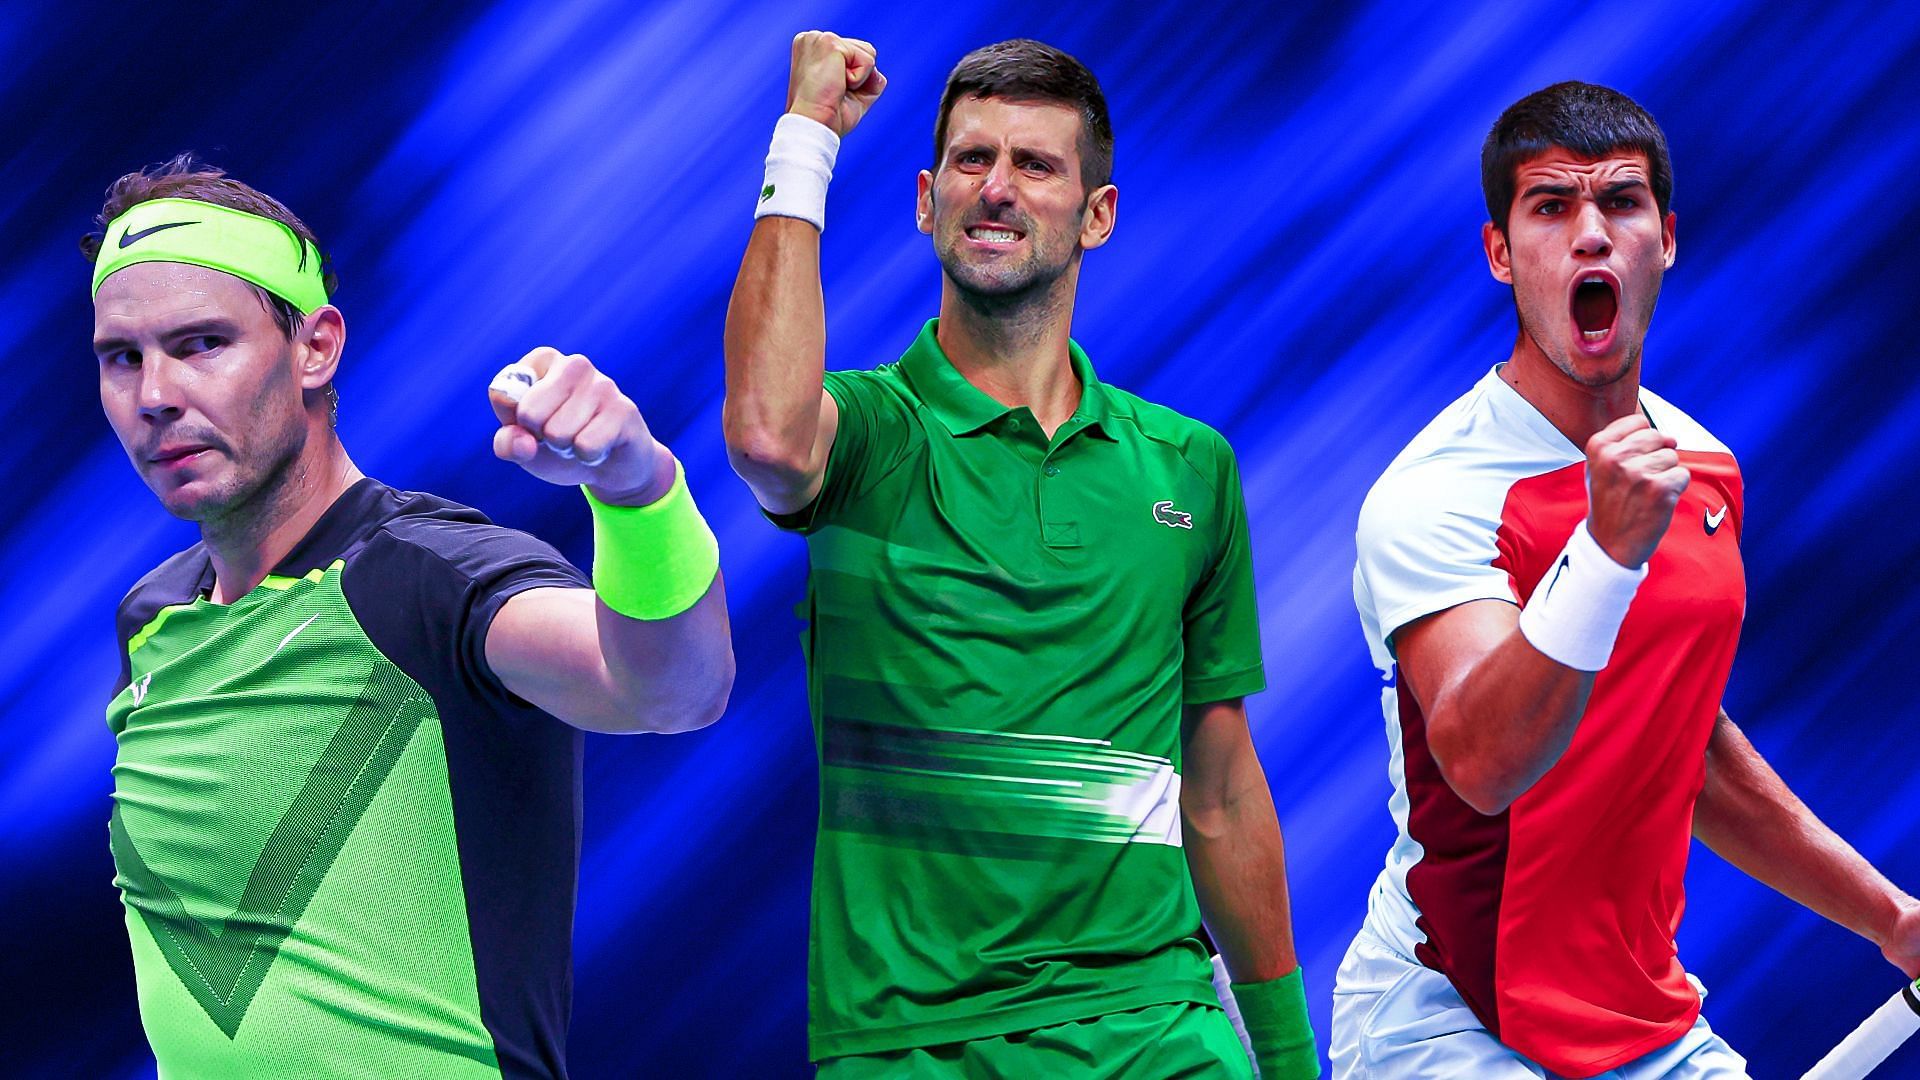 Top 10 prize money earners of the 2022 ATP season ft. Novak Djokovic, Rafael Nadal, Carlos Alcaraz